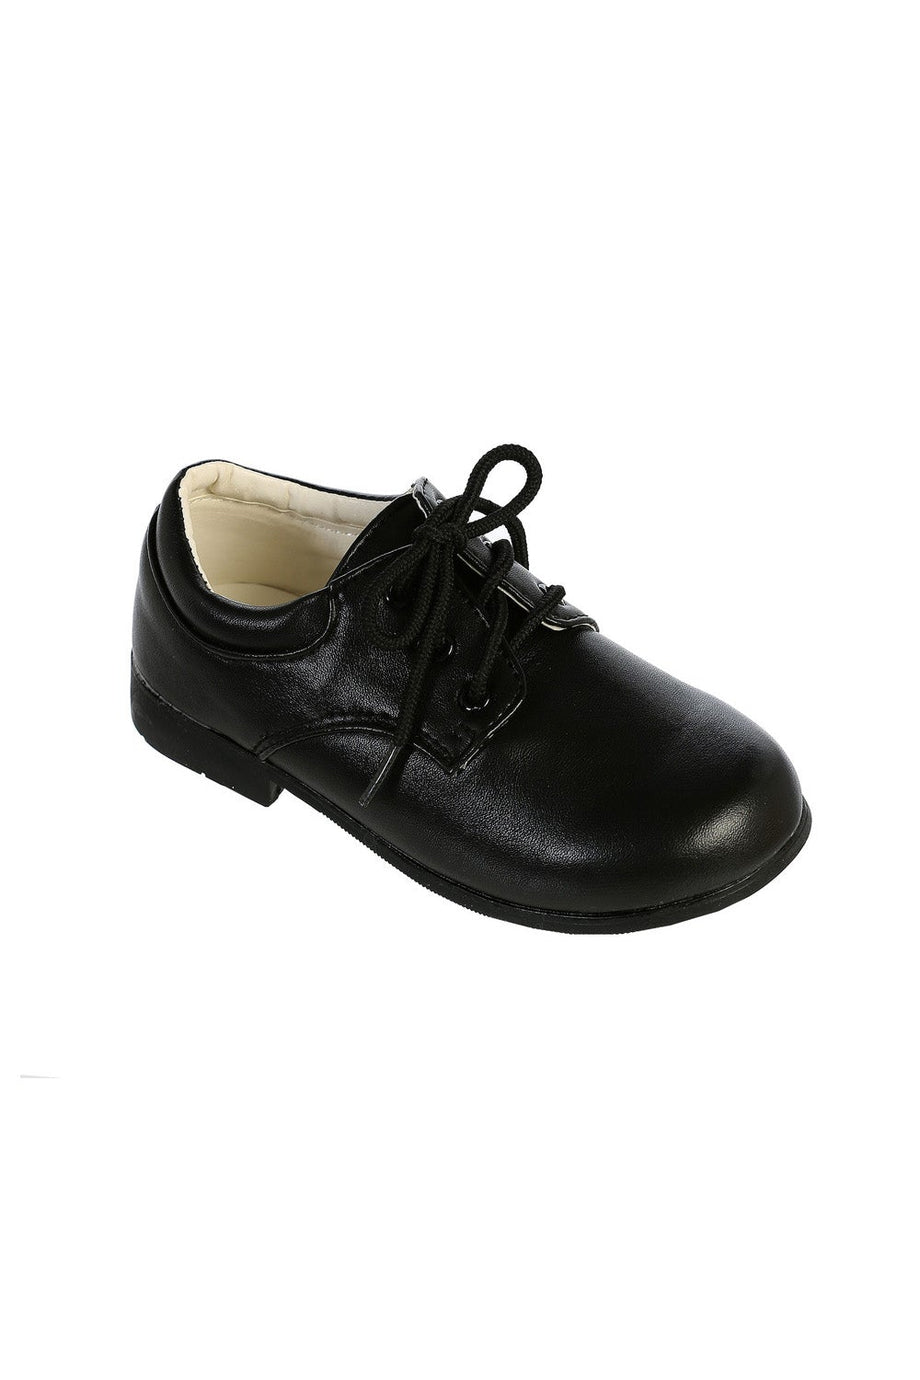 Tip Top "Vista" Kids Black Matte Round Toe Lace Up Shoes